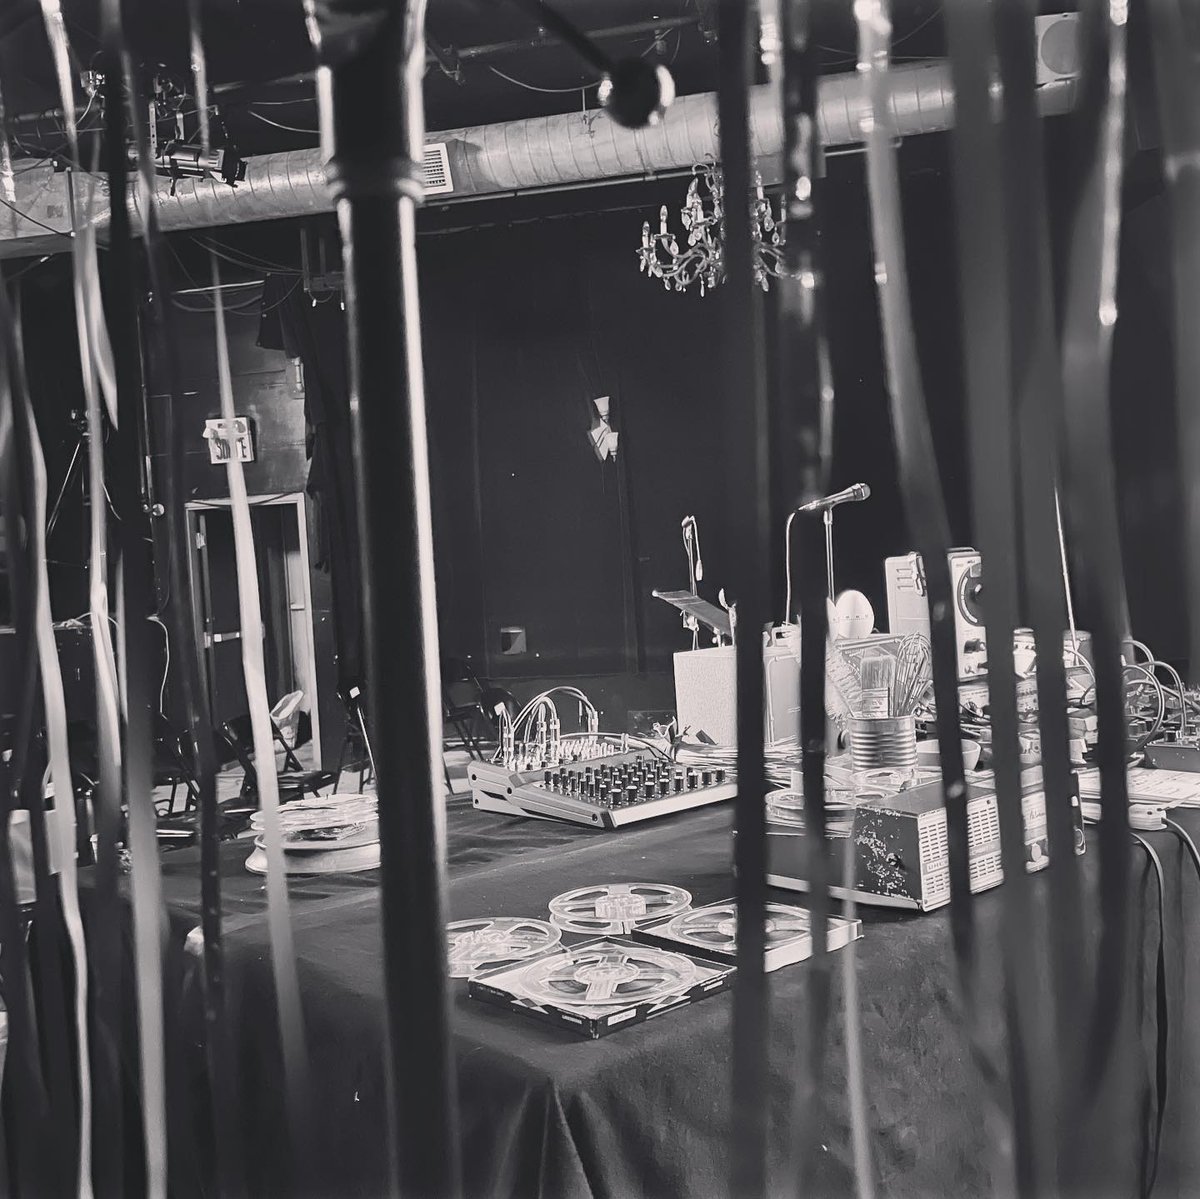 Rehearsing Mythy w Jeremy Young for live performance of his Amaro tonight on Suoni TV! W @idatoninato MayaKuroki, NickKuepfer, JulieRichard. Tix online/at door. Doors 7:30 show 8 pm EDT. Watch online, free. #suonitv #amaro #tapemusic #wordsound #Montreal 
facebook.com/events/5768451…